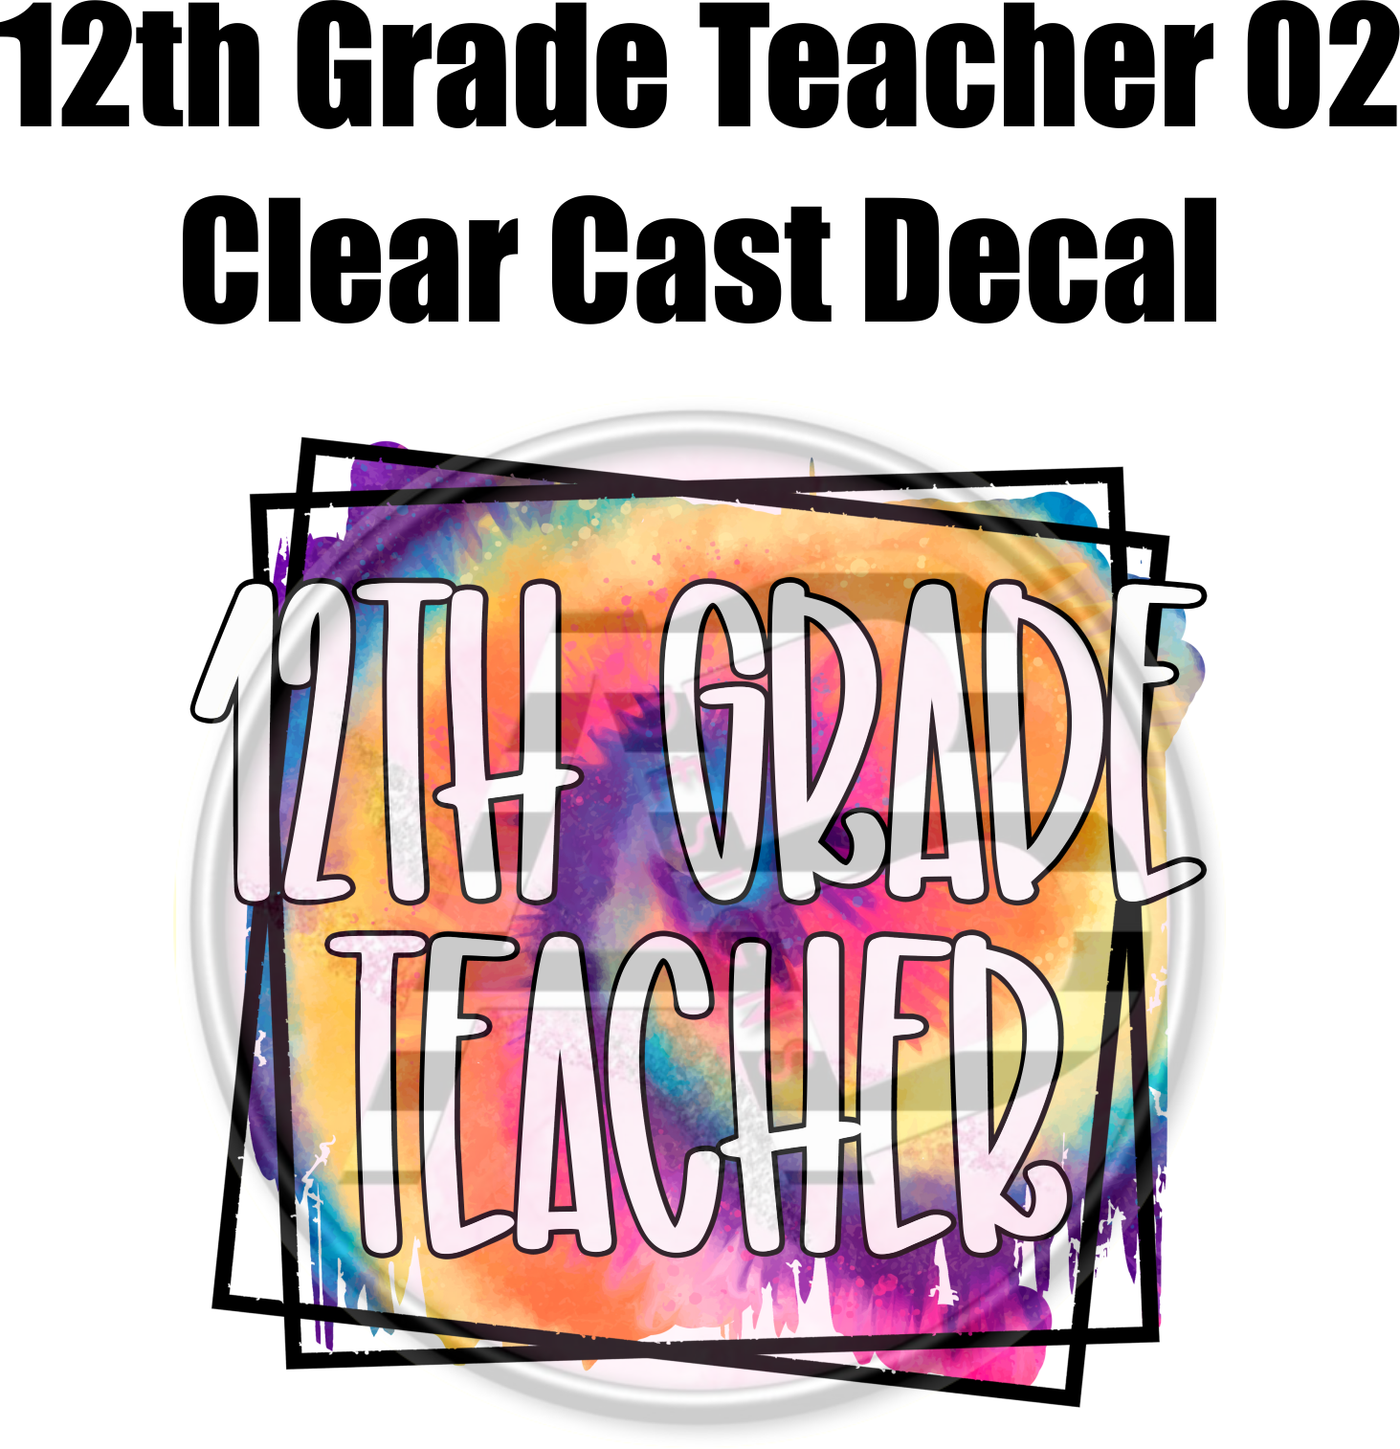 12th Grade Teacher 02 - Clear Cast Decal - 38